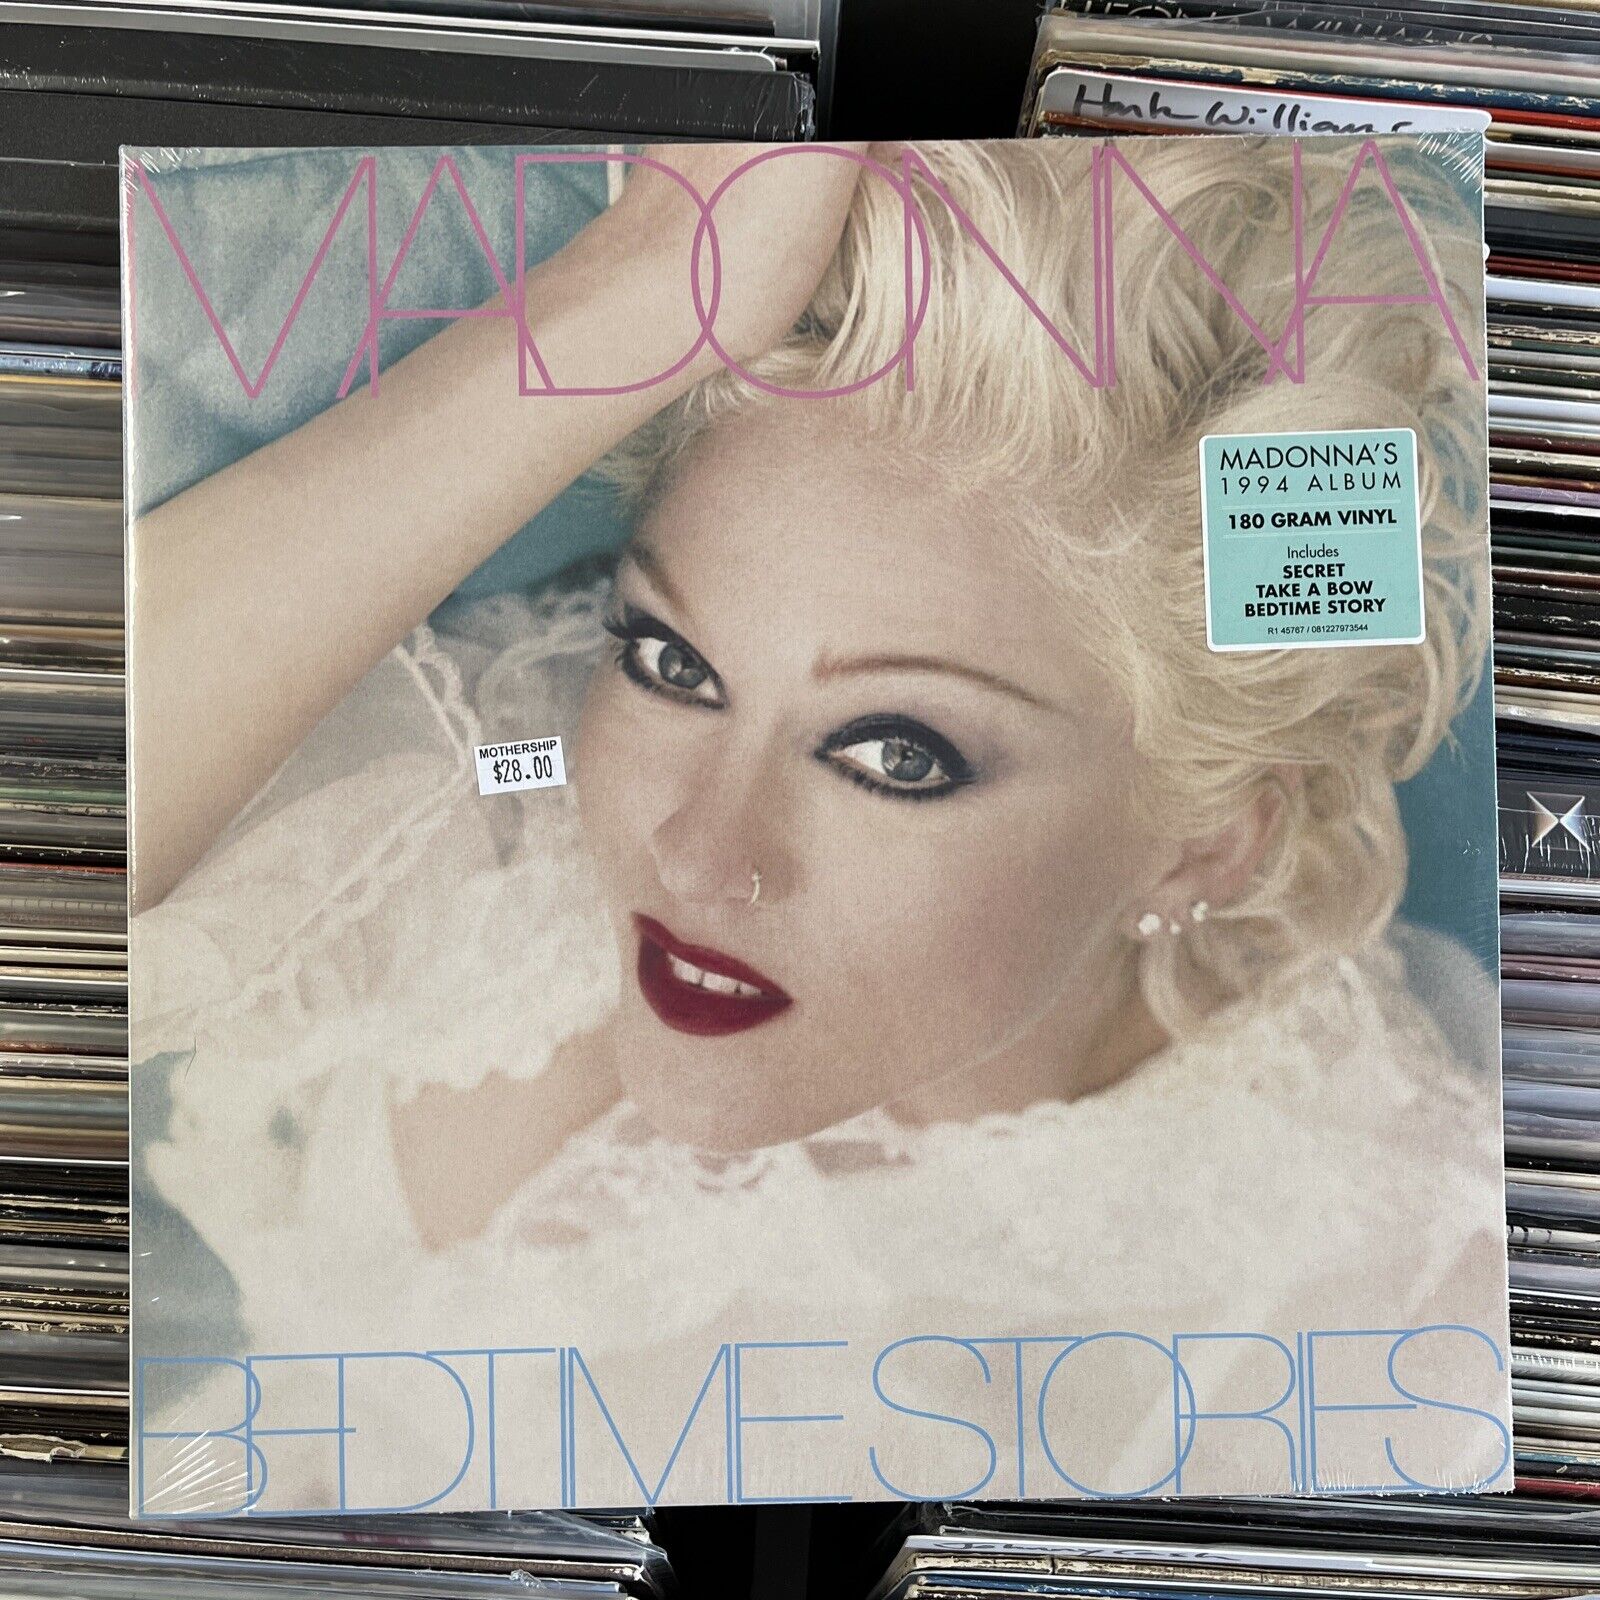 Madonna - Bedtime Stories NEW Sealed 180 Gram Vinyl LP Record Album